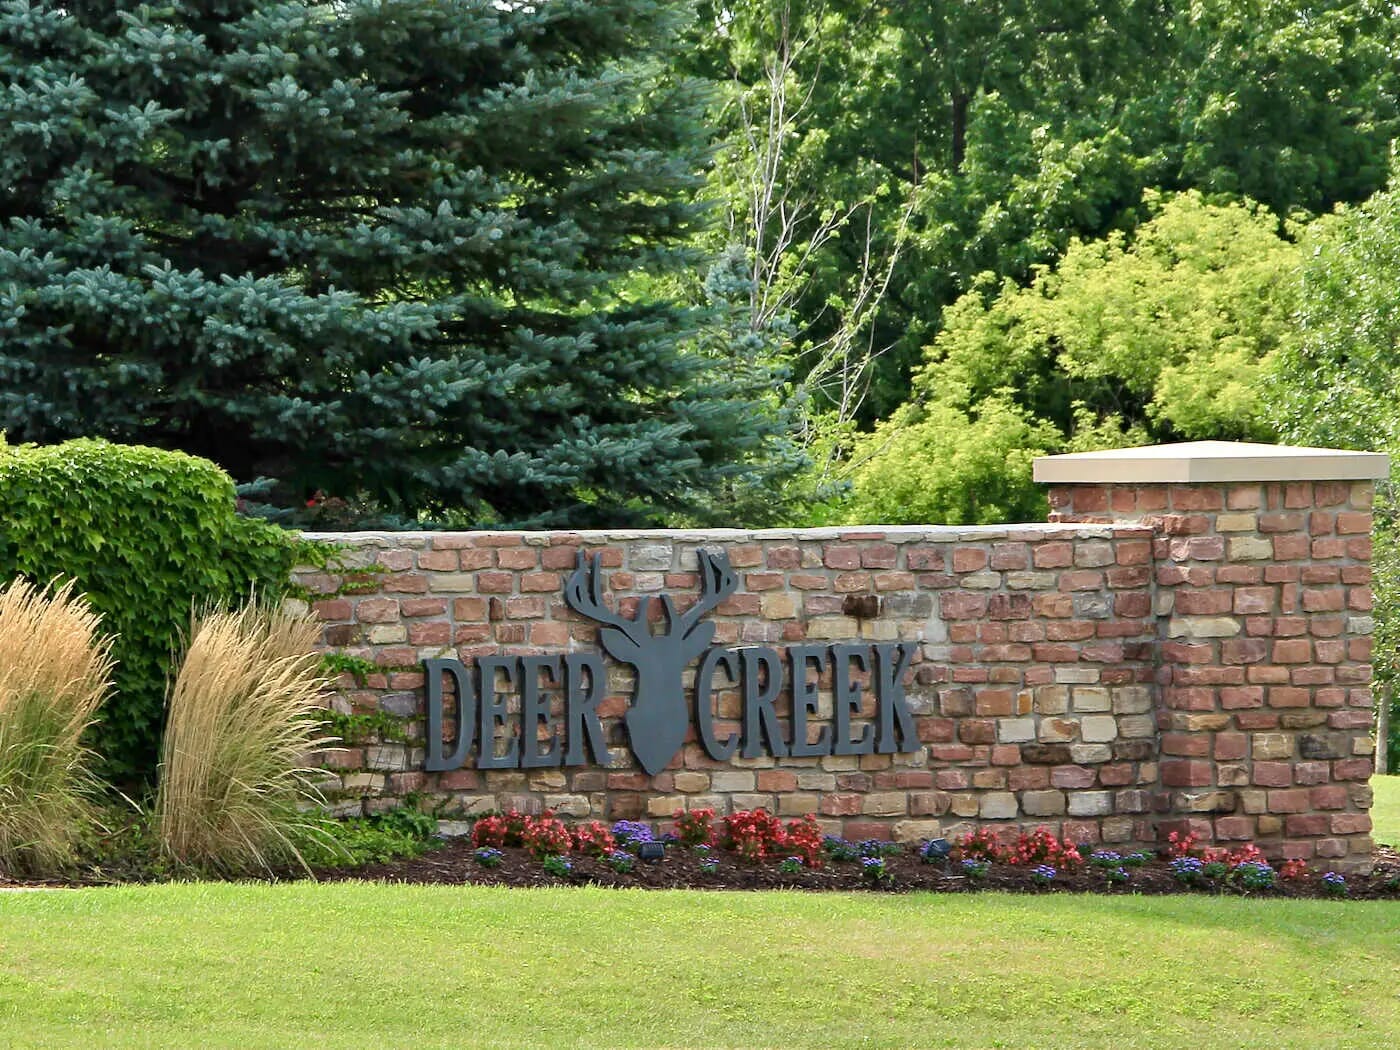 Deer Creek Neighborhood - Omaha, Nebraska